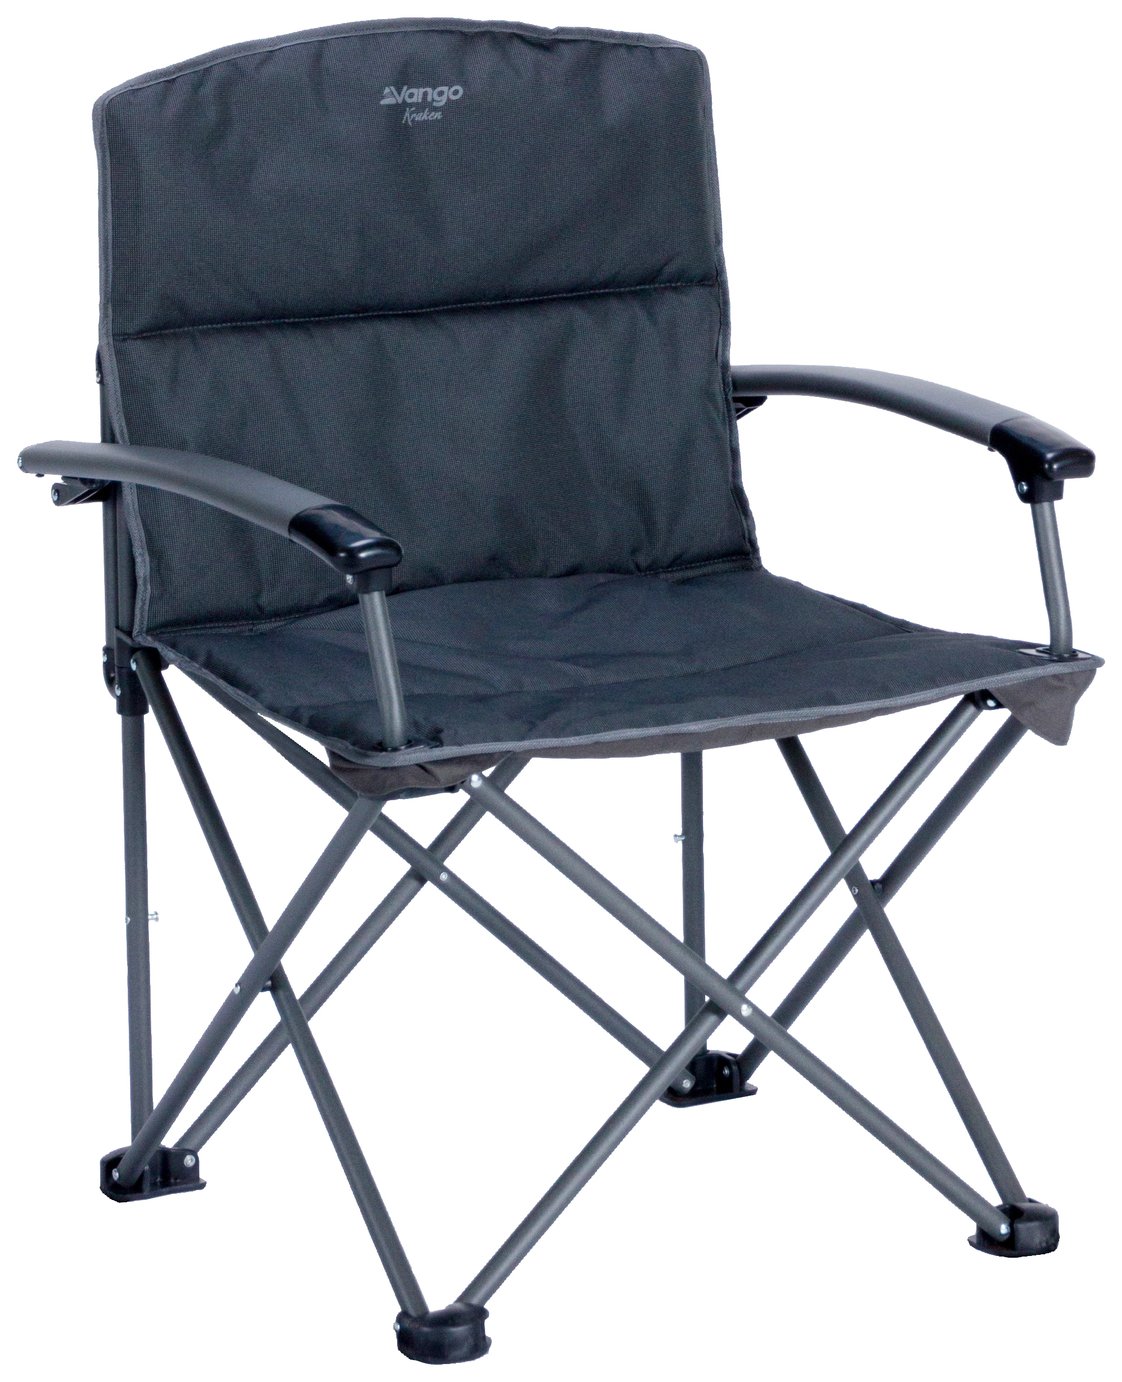 asda double camping chair